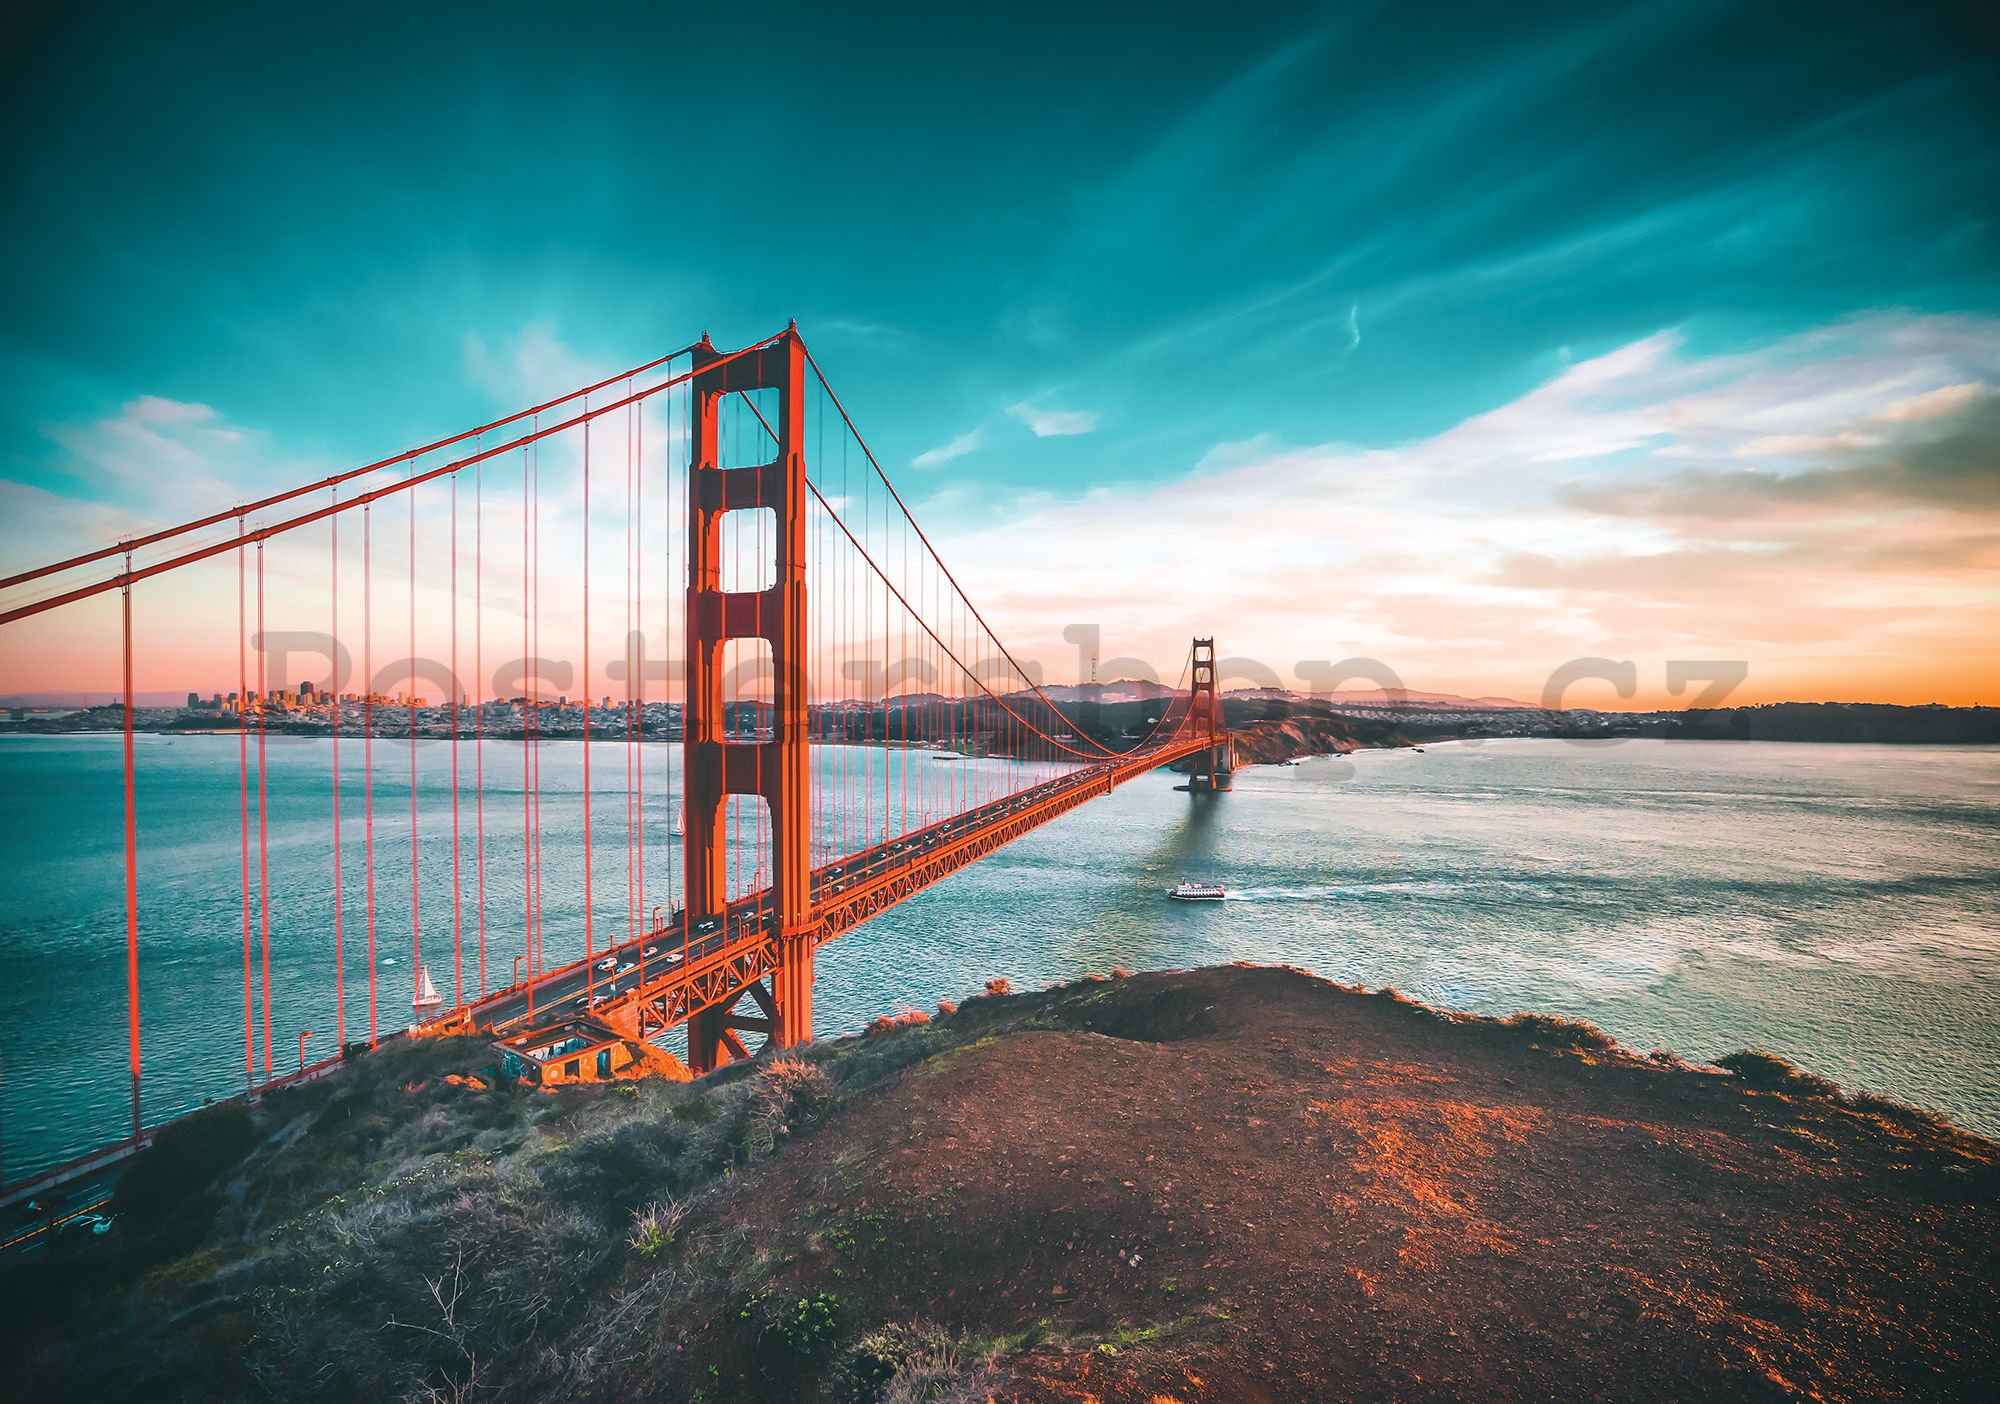 Fototapeta vliesová: Most San Francisco - 416x254 cm